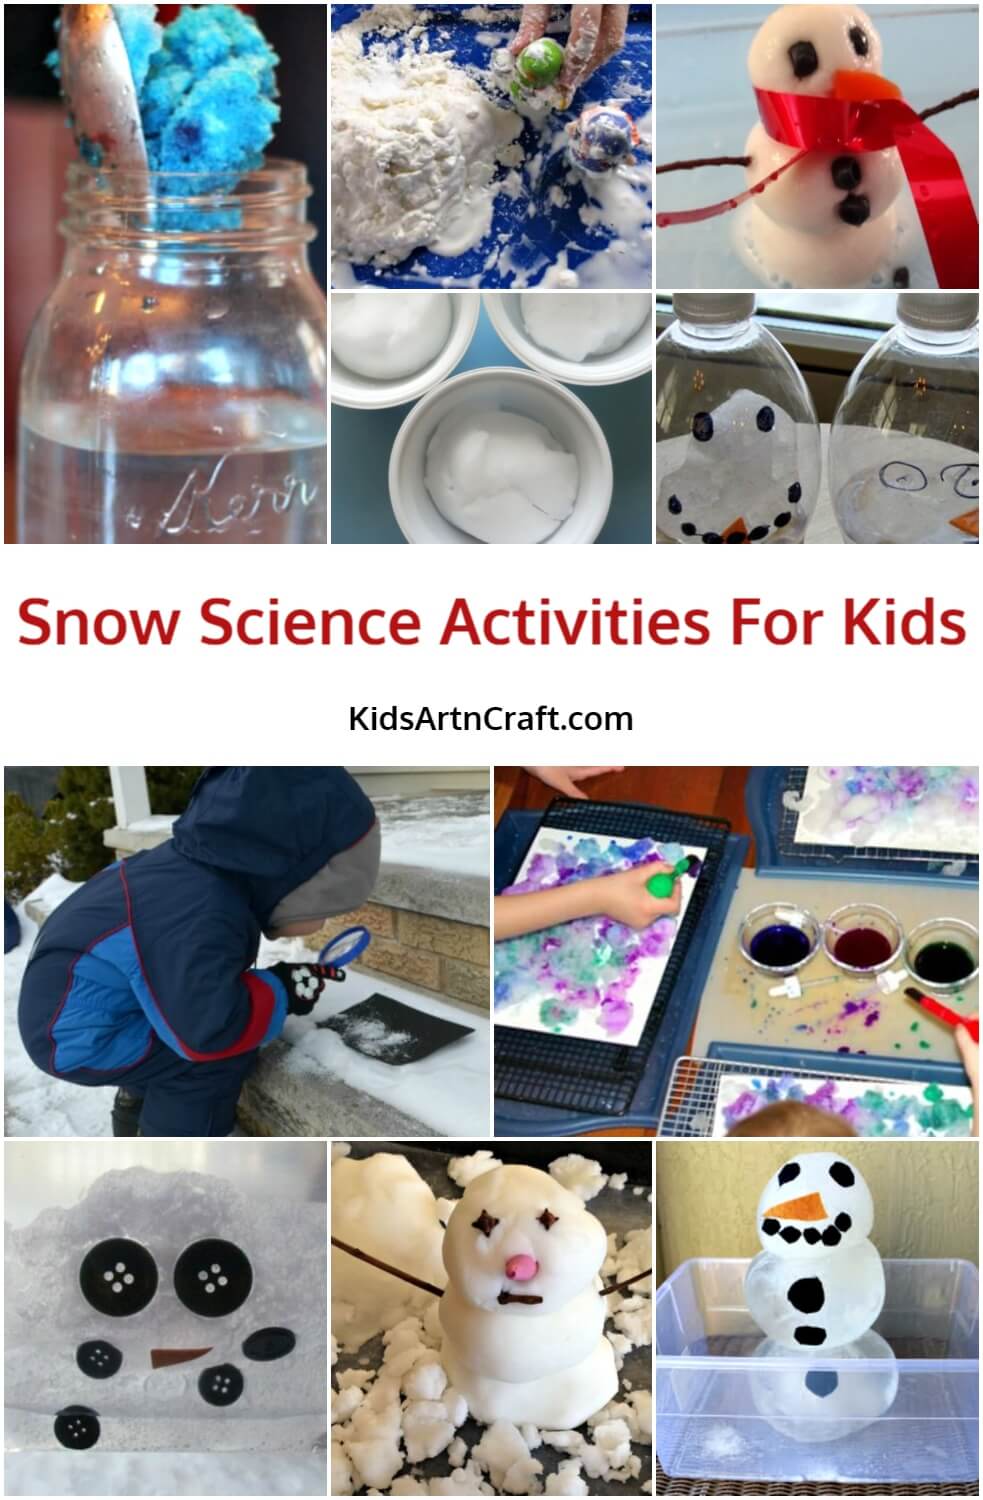 Snow Science Activities For Kids